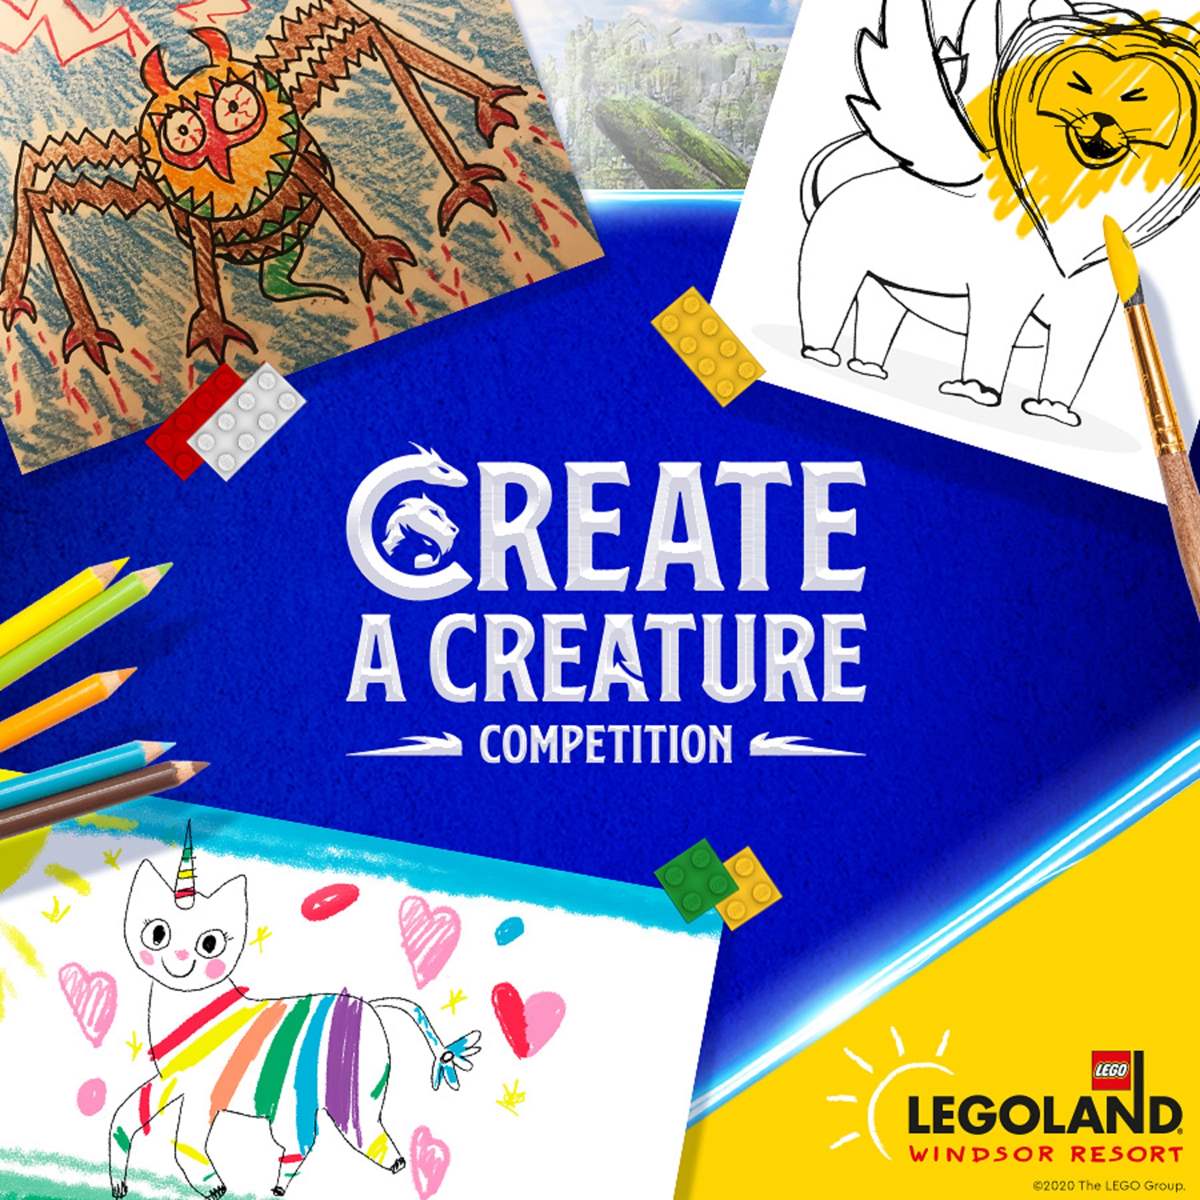 LEGOLAND Windsor Resort Extends Mythical Design Competition To Help Kids Get Creative During Lockdown